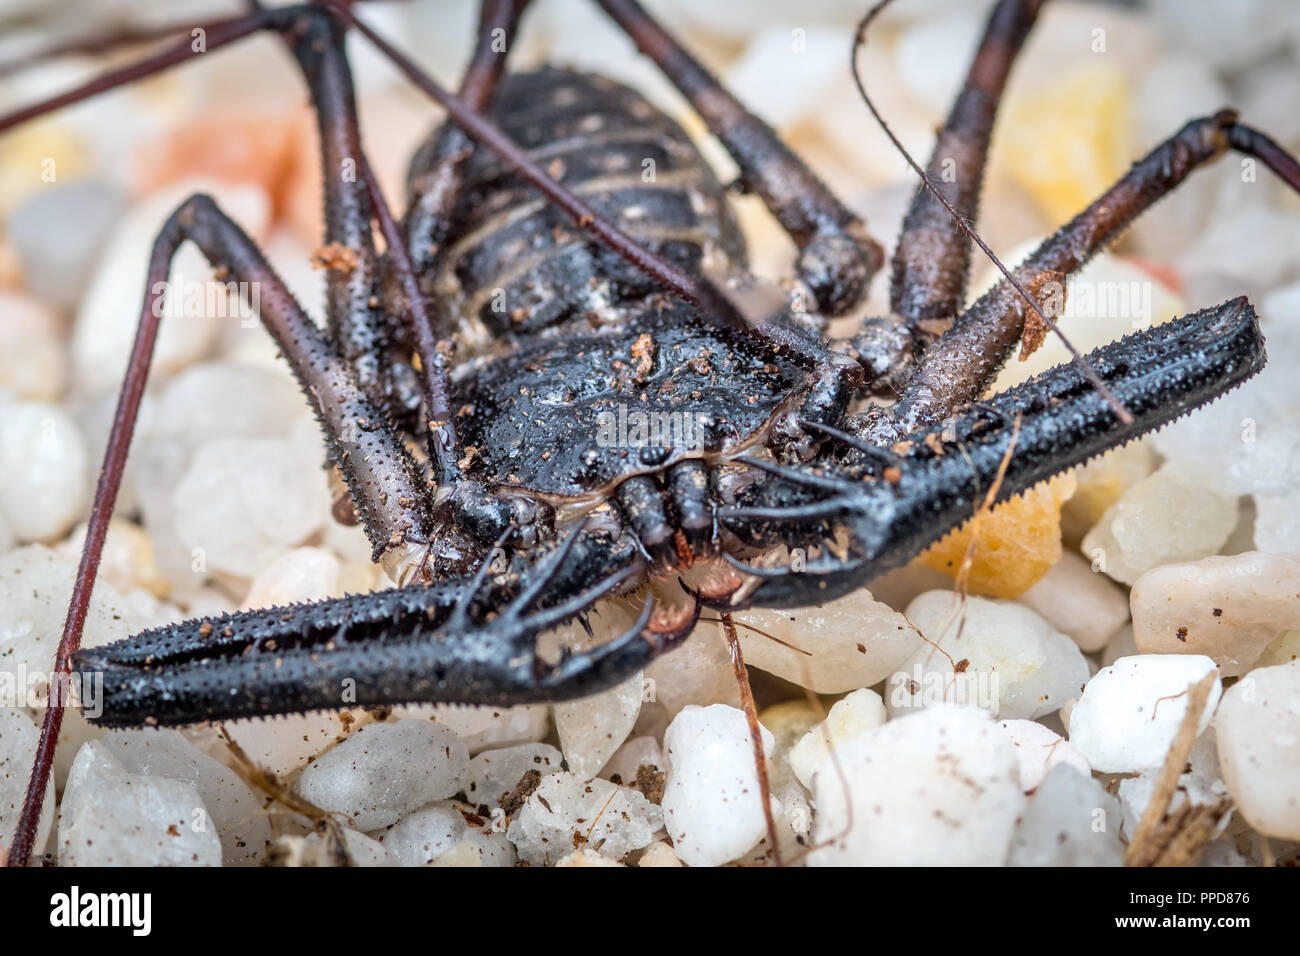 Tailless Whip Scorpion (Amblypygi) Stock Photo